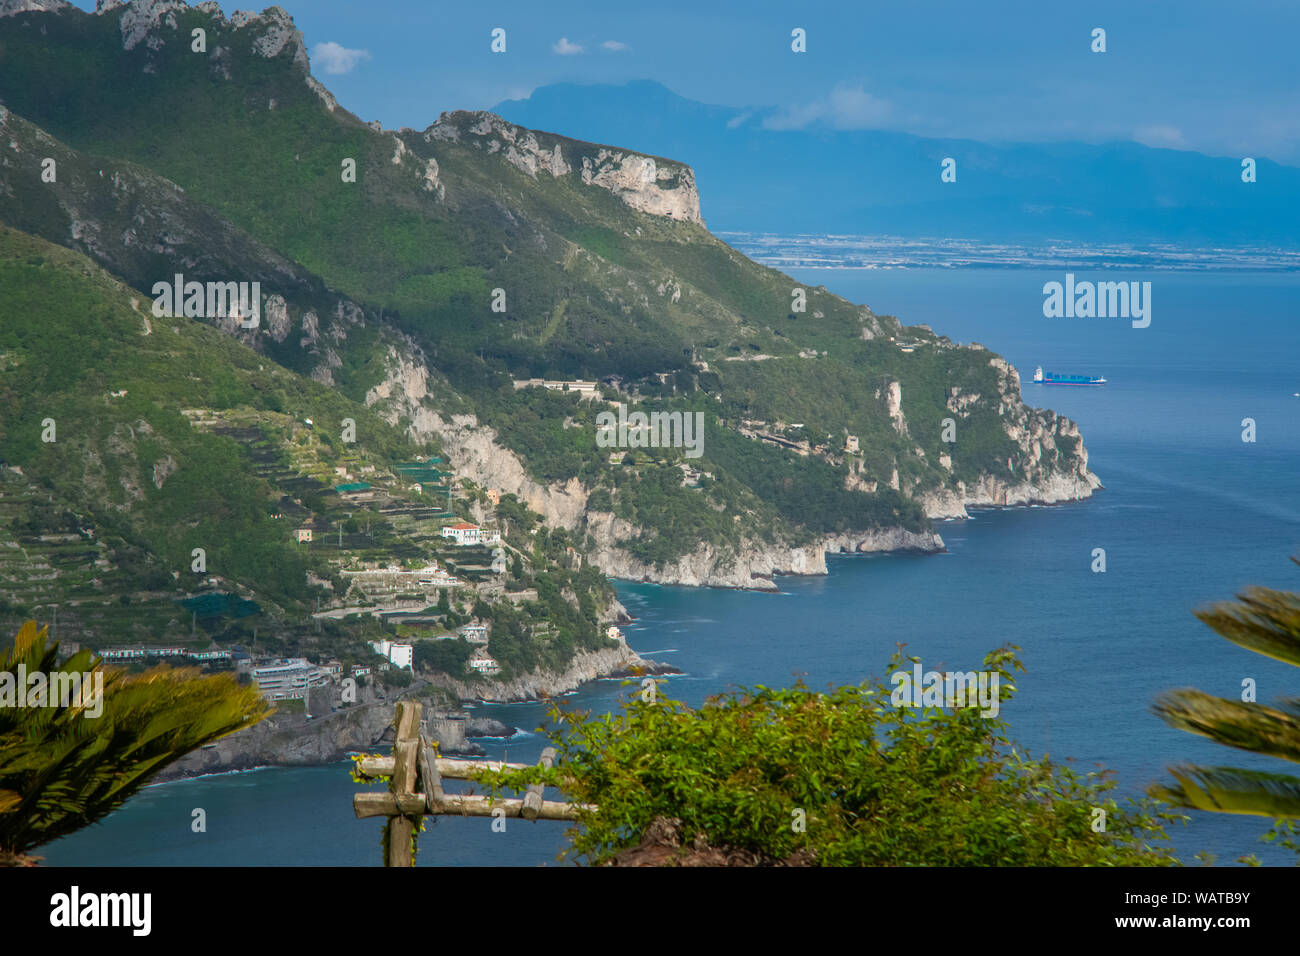 Sea and Mountains view from the Garden of Villa Rufolo, historic center of Ravello, Amalfi Coast of Italy Stock Photo